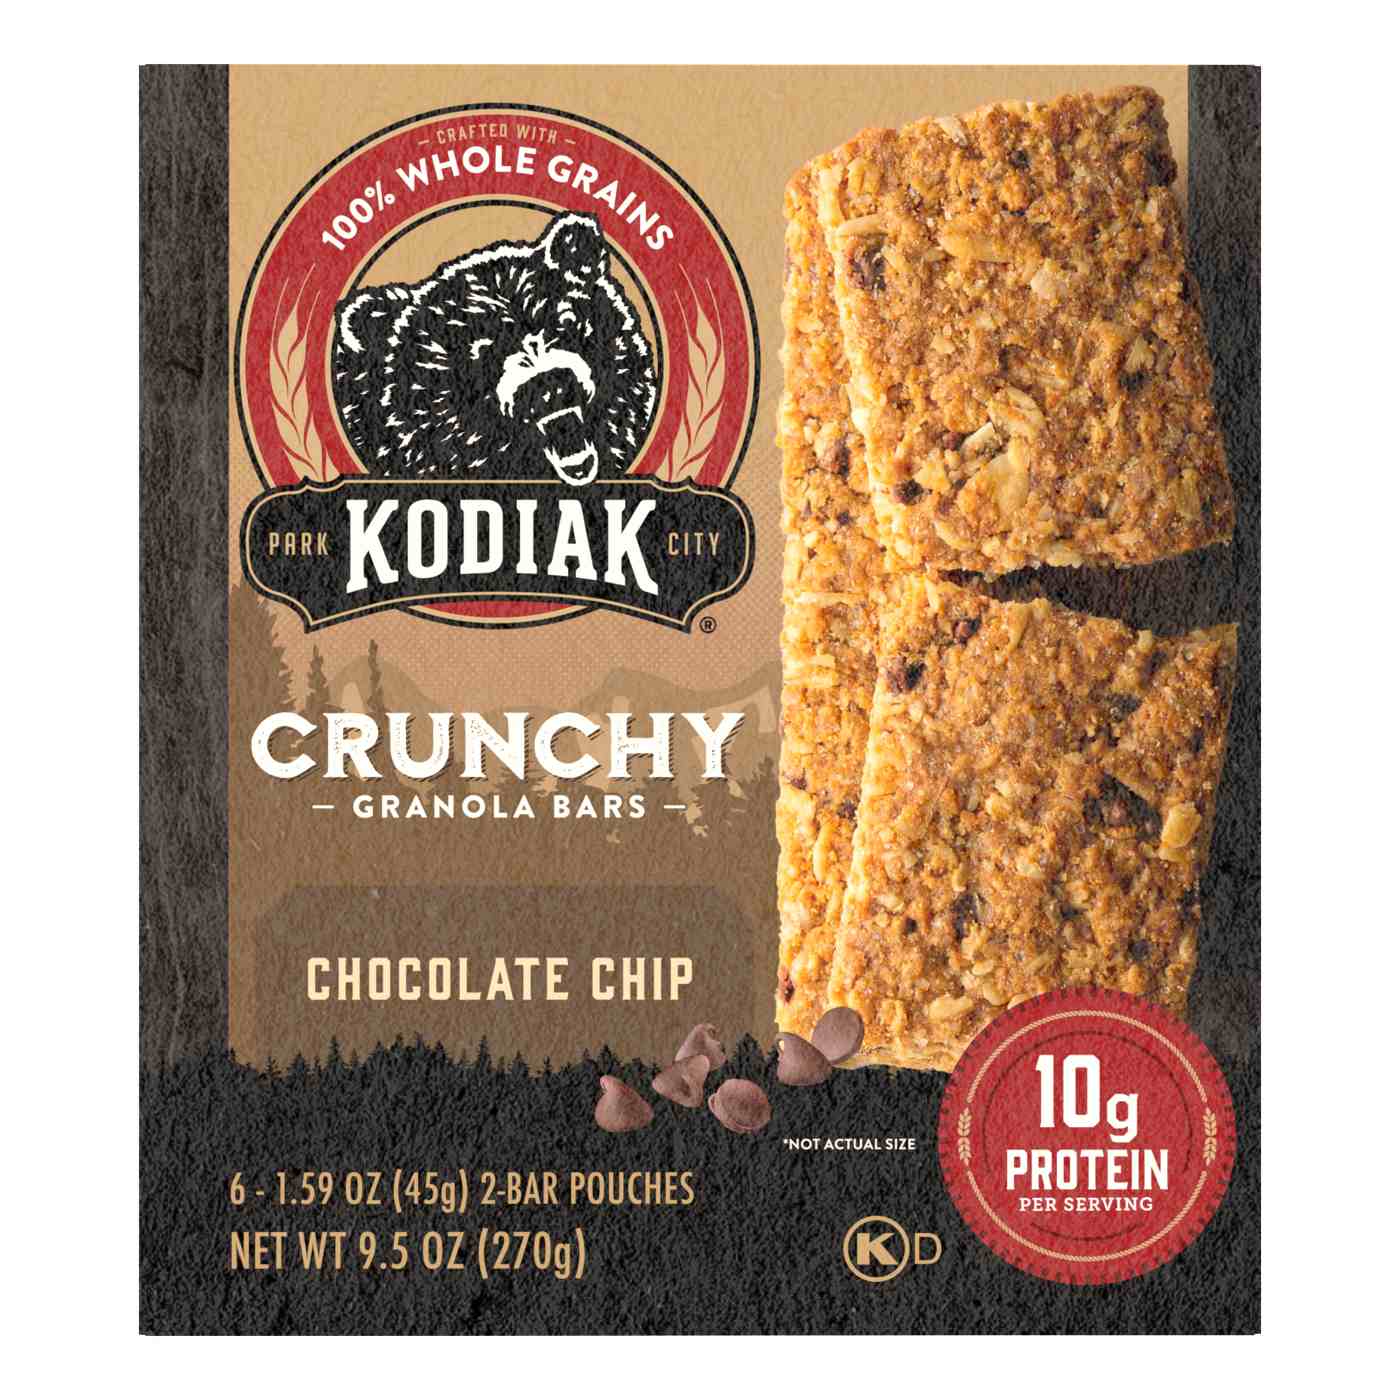 Kodiak 10g Protein Crunchy Granola Bars - Chocolate Chip; image 1 of 2